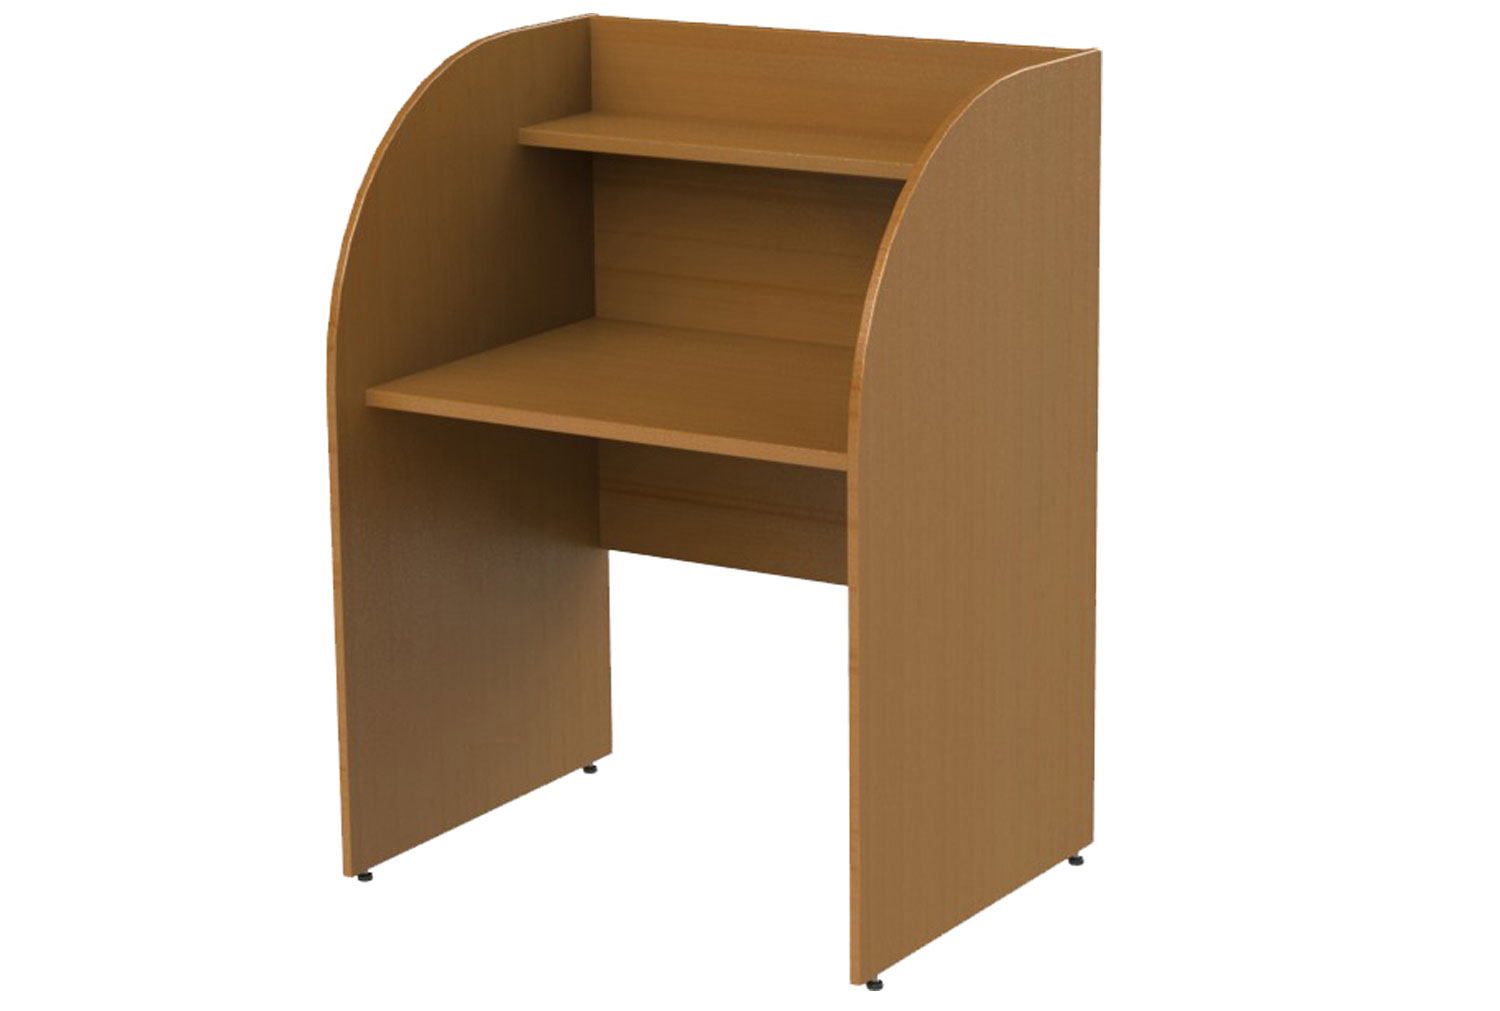 Deluxe Single Sided Panel End Study Carrel Starter Desk, Maple